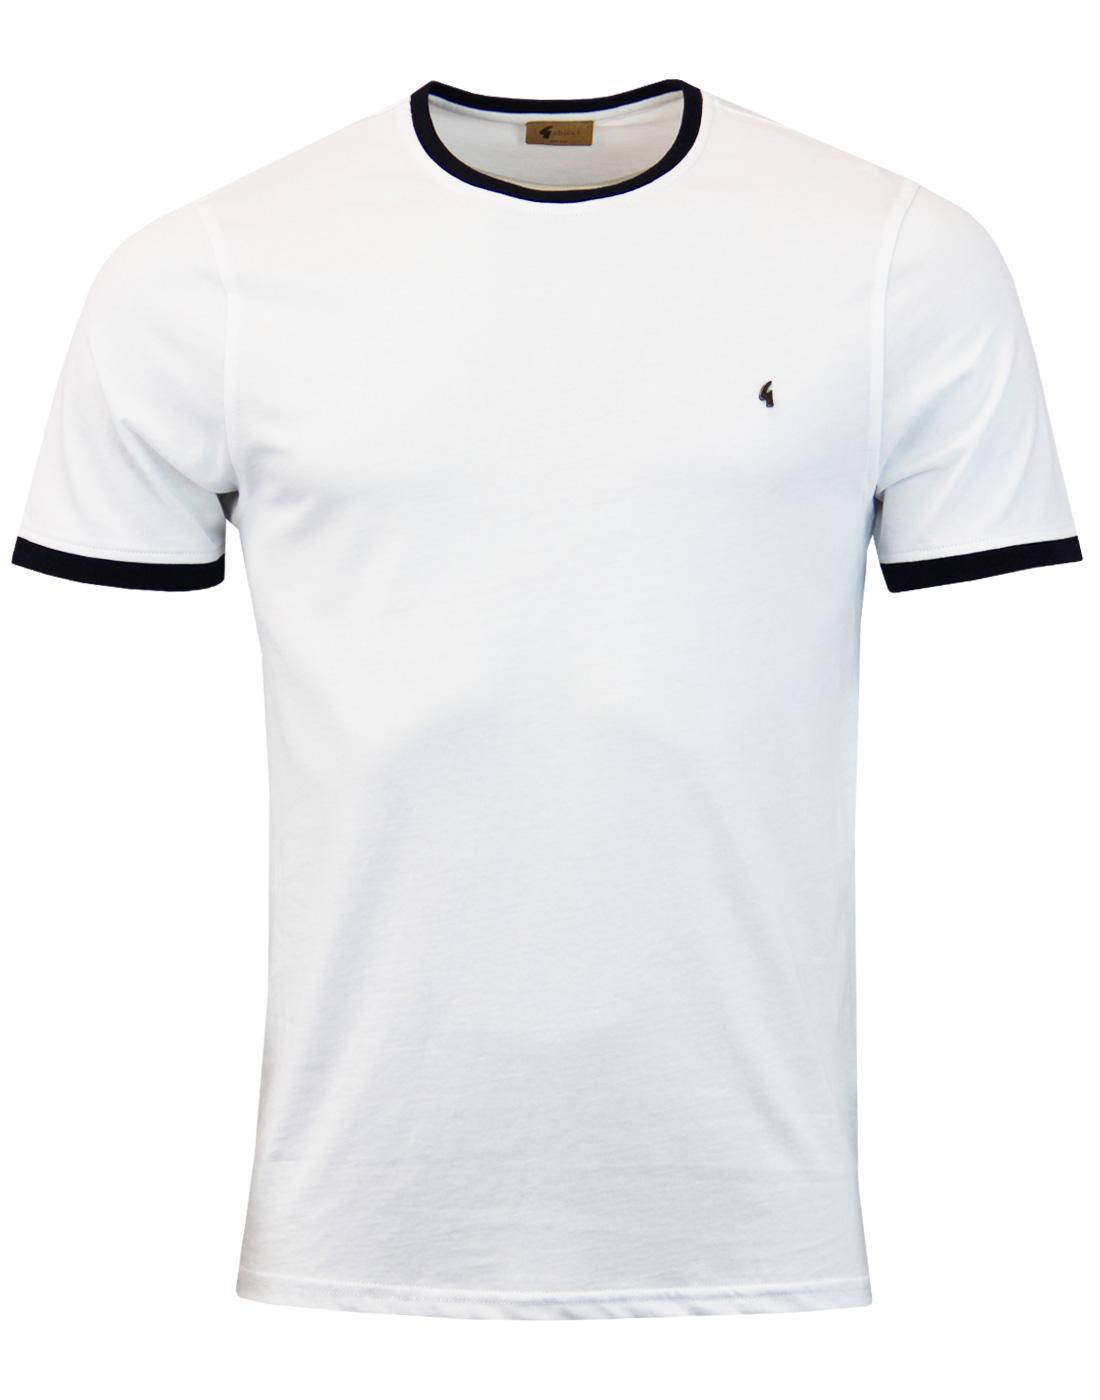 GABICCI VINTAGE Retro 60s Mod Ringer T-shirt WHITE